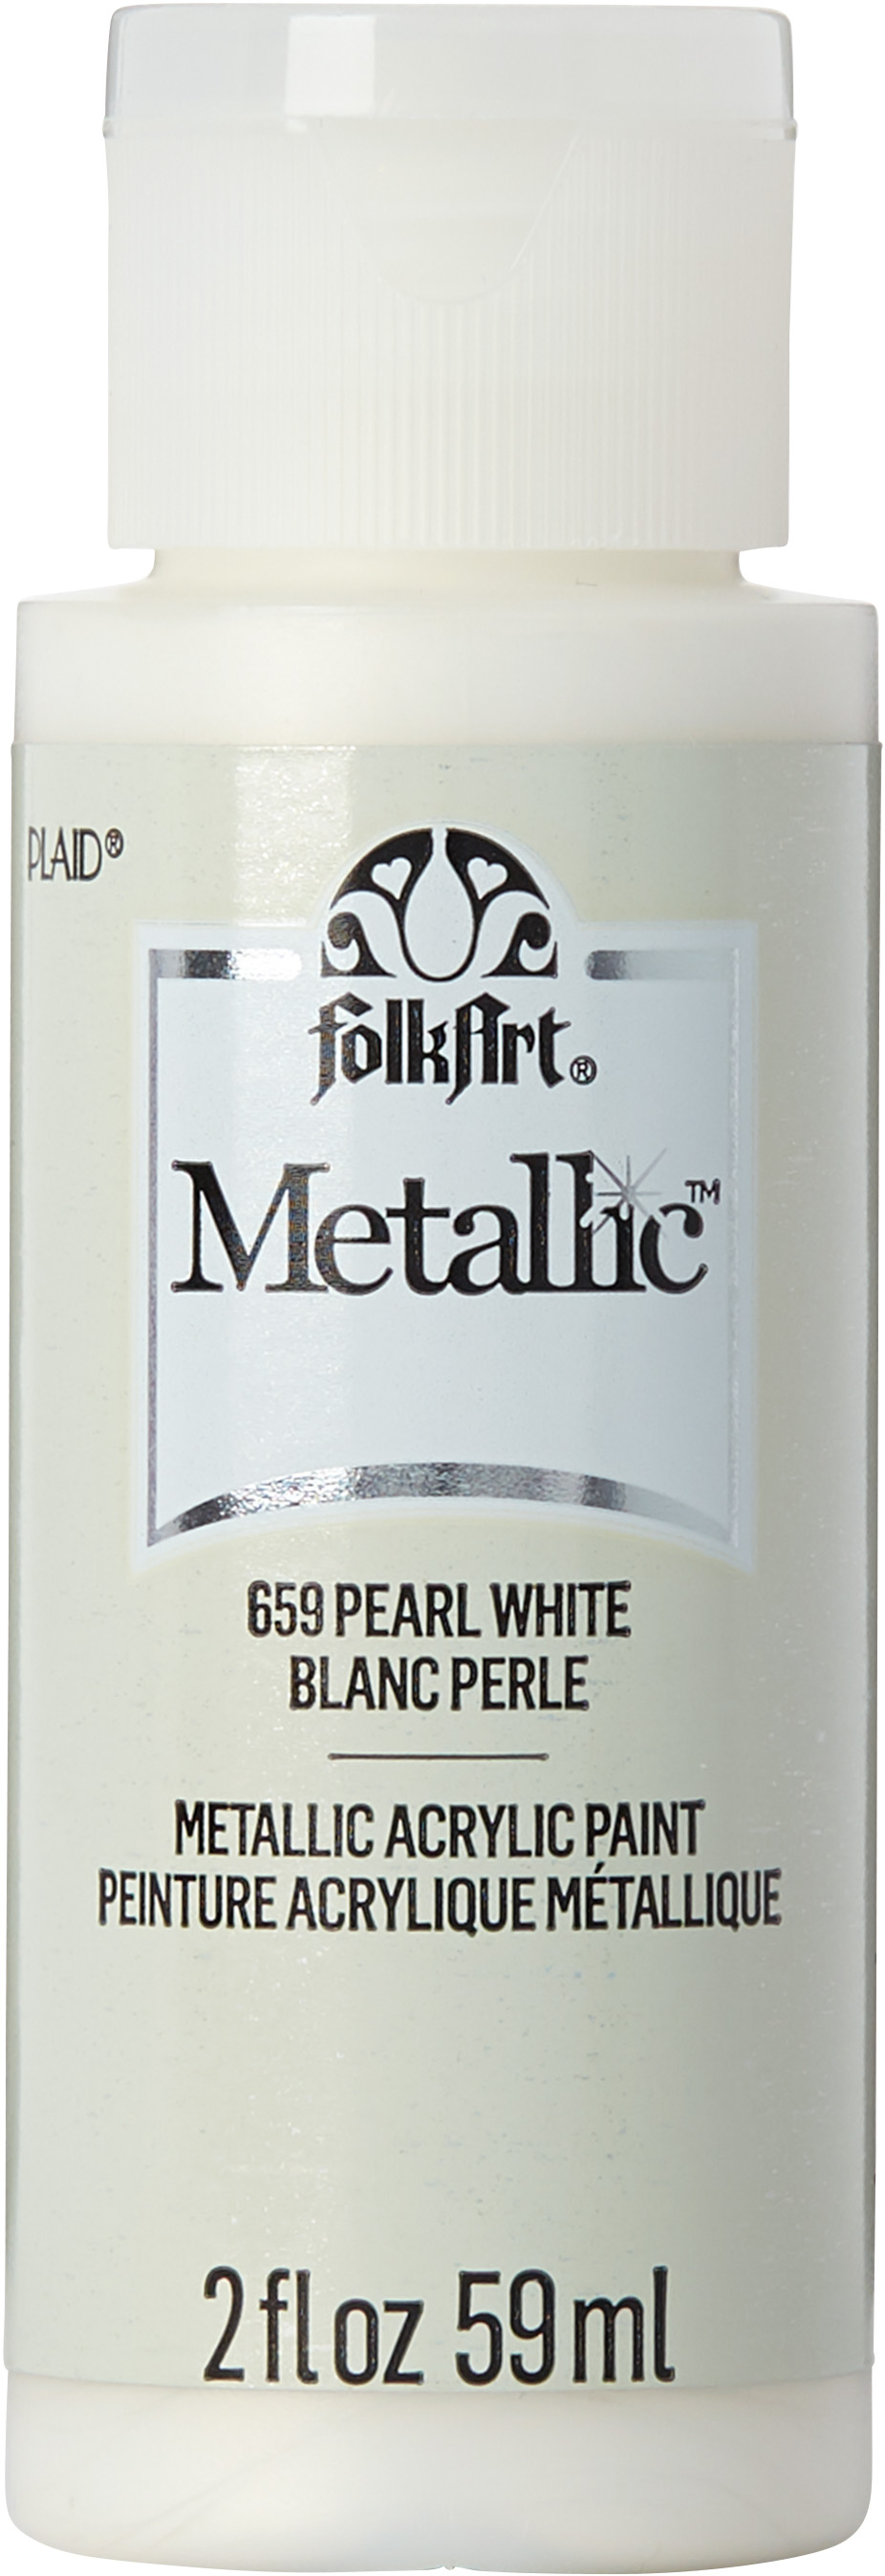 Folk Art Metallic Acrylic Paint, Pearl White - 2 fl oz bottle